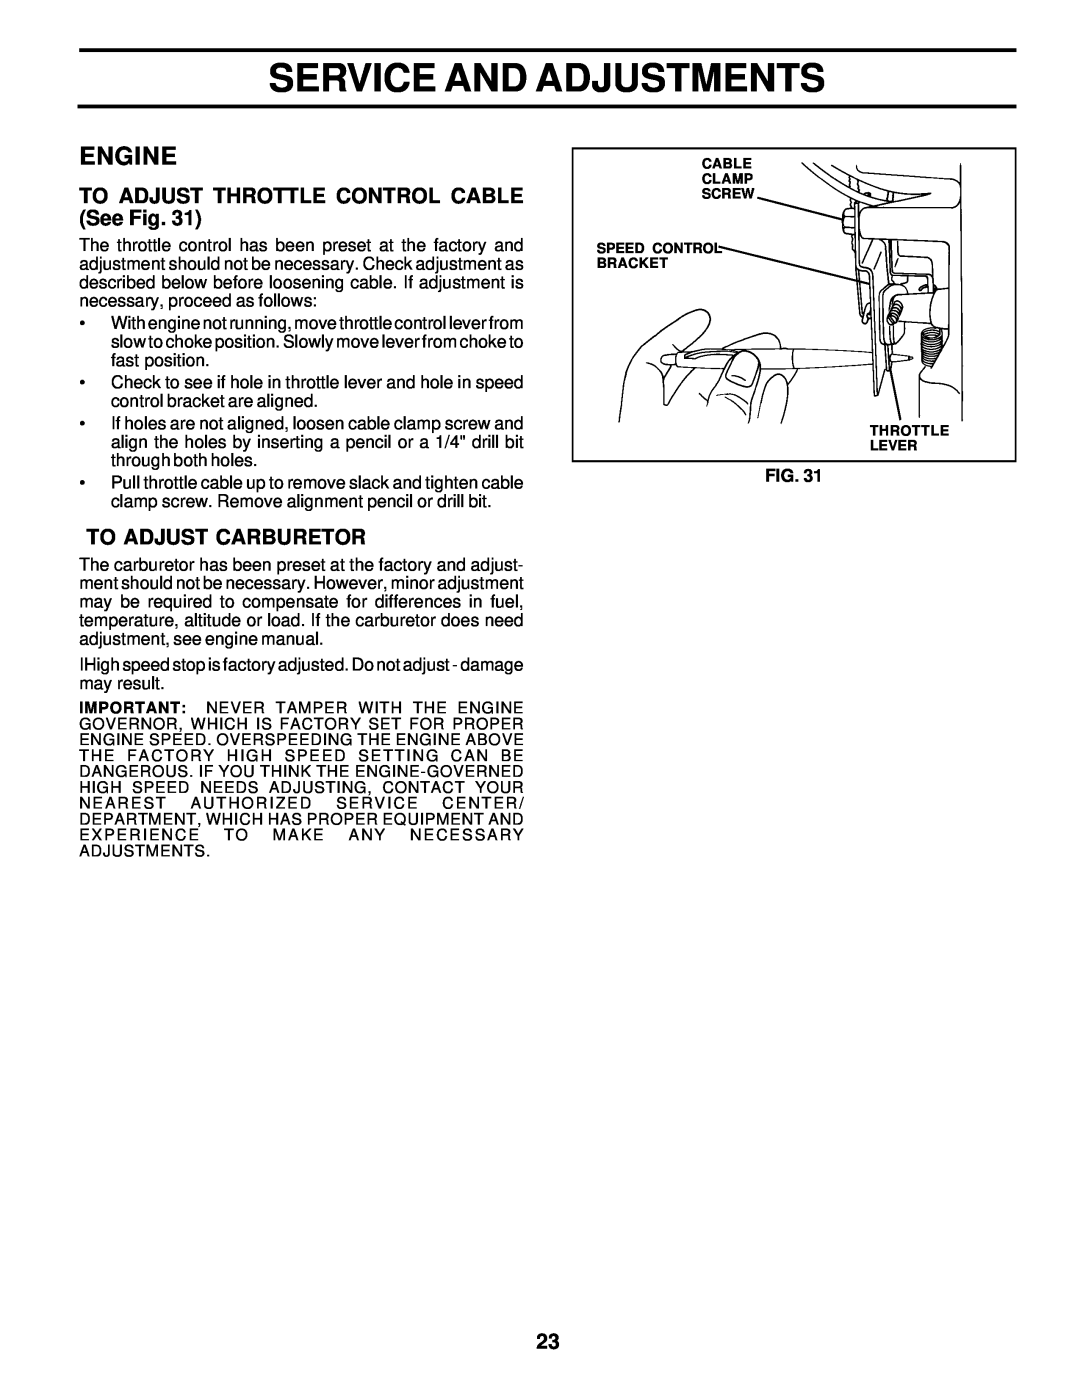 Poulan 178108 owner manual TO ADJUST THROTTLE CONTROL CABLE See Fig, To Adjust Carburetor, Service And Adjustments, Engine 